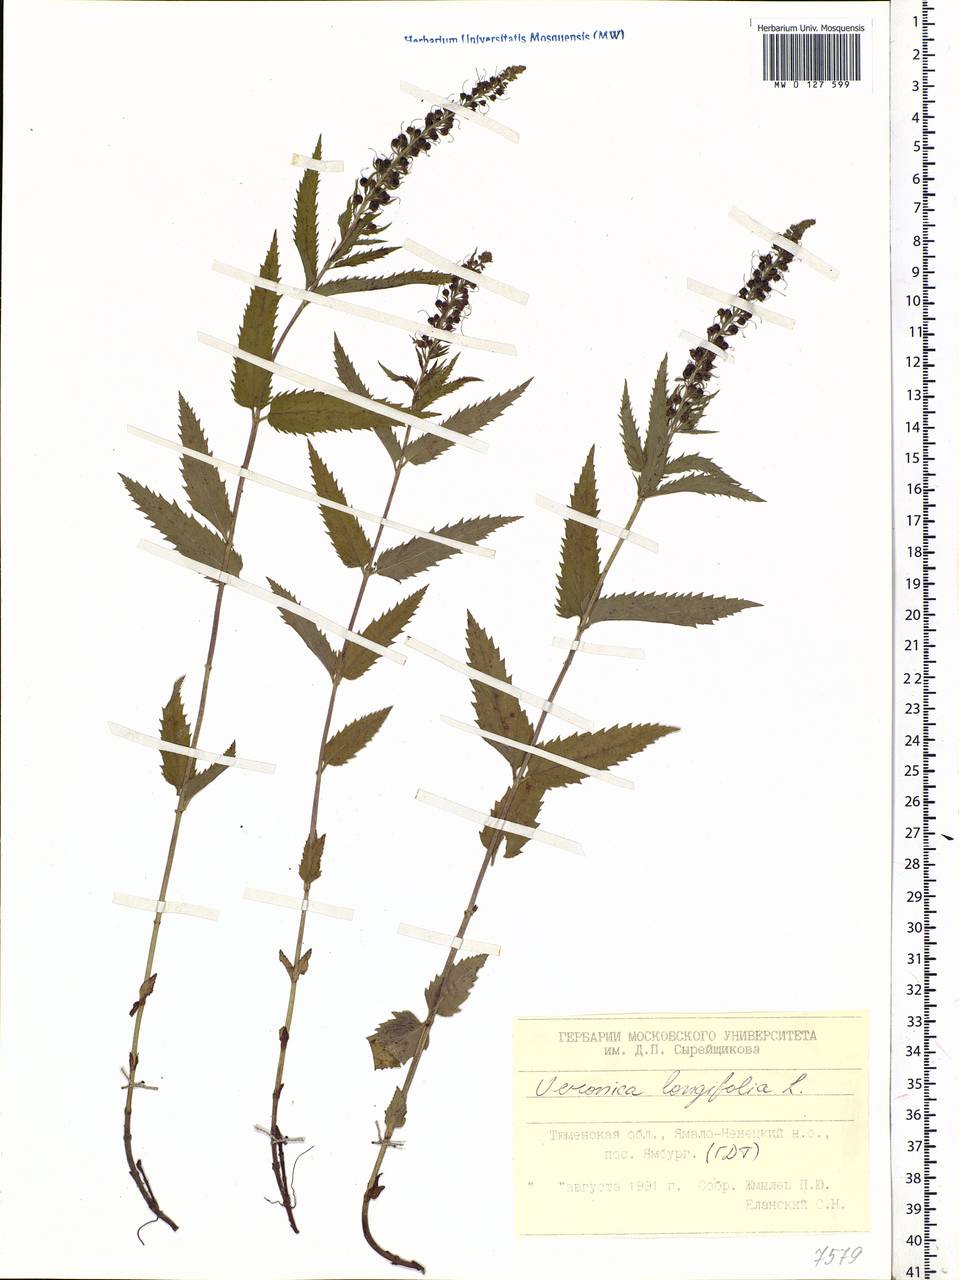 Veronica longifolia L., Siberia, Western Siberia (S1) (Russia)